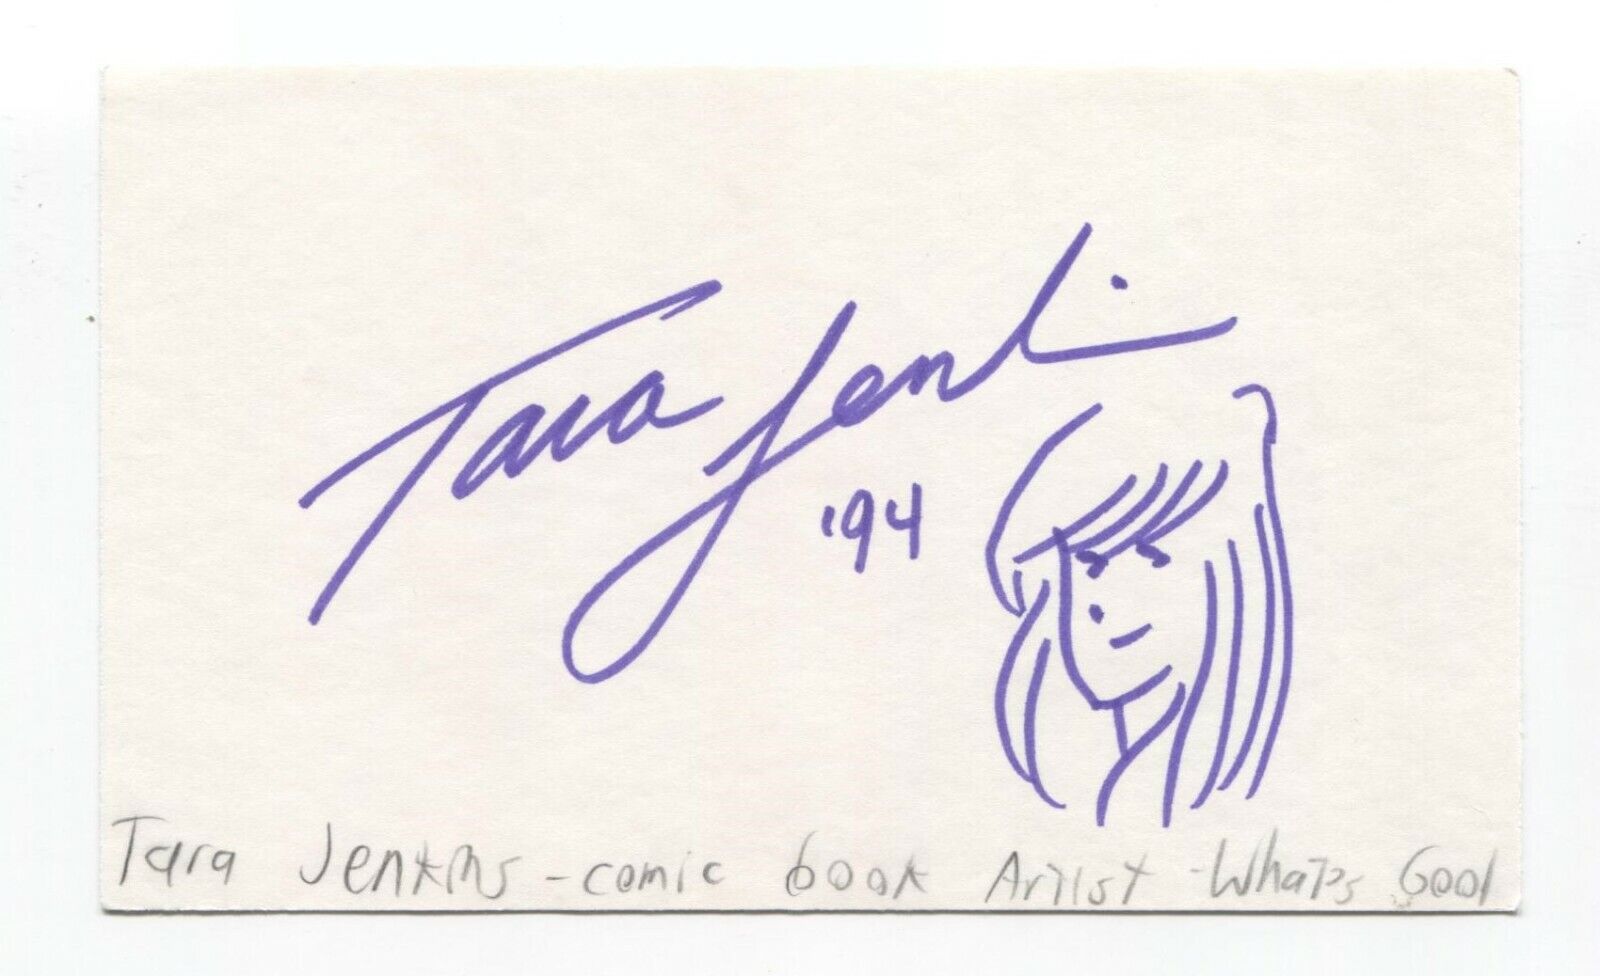 Tara Jenkins Signed Index Card Autograph Signature Comic Artist